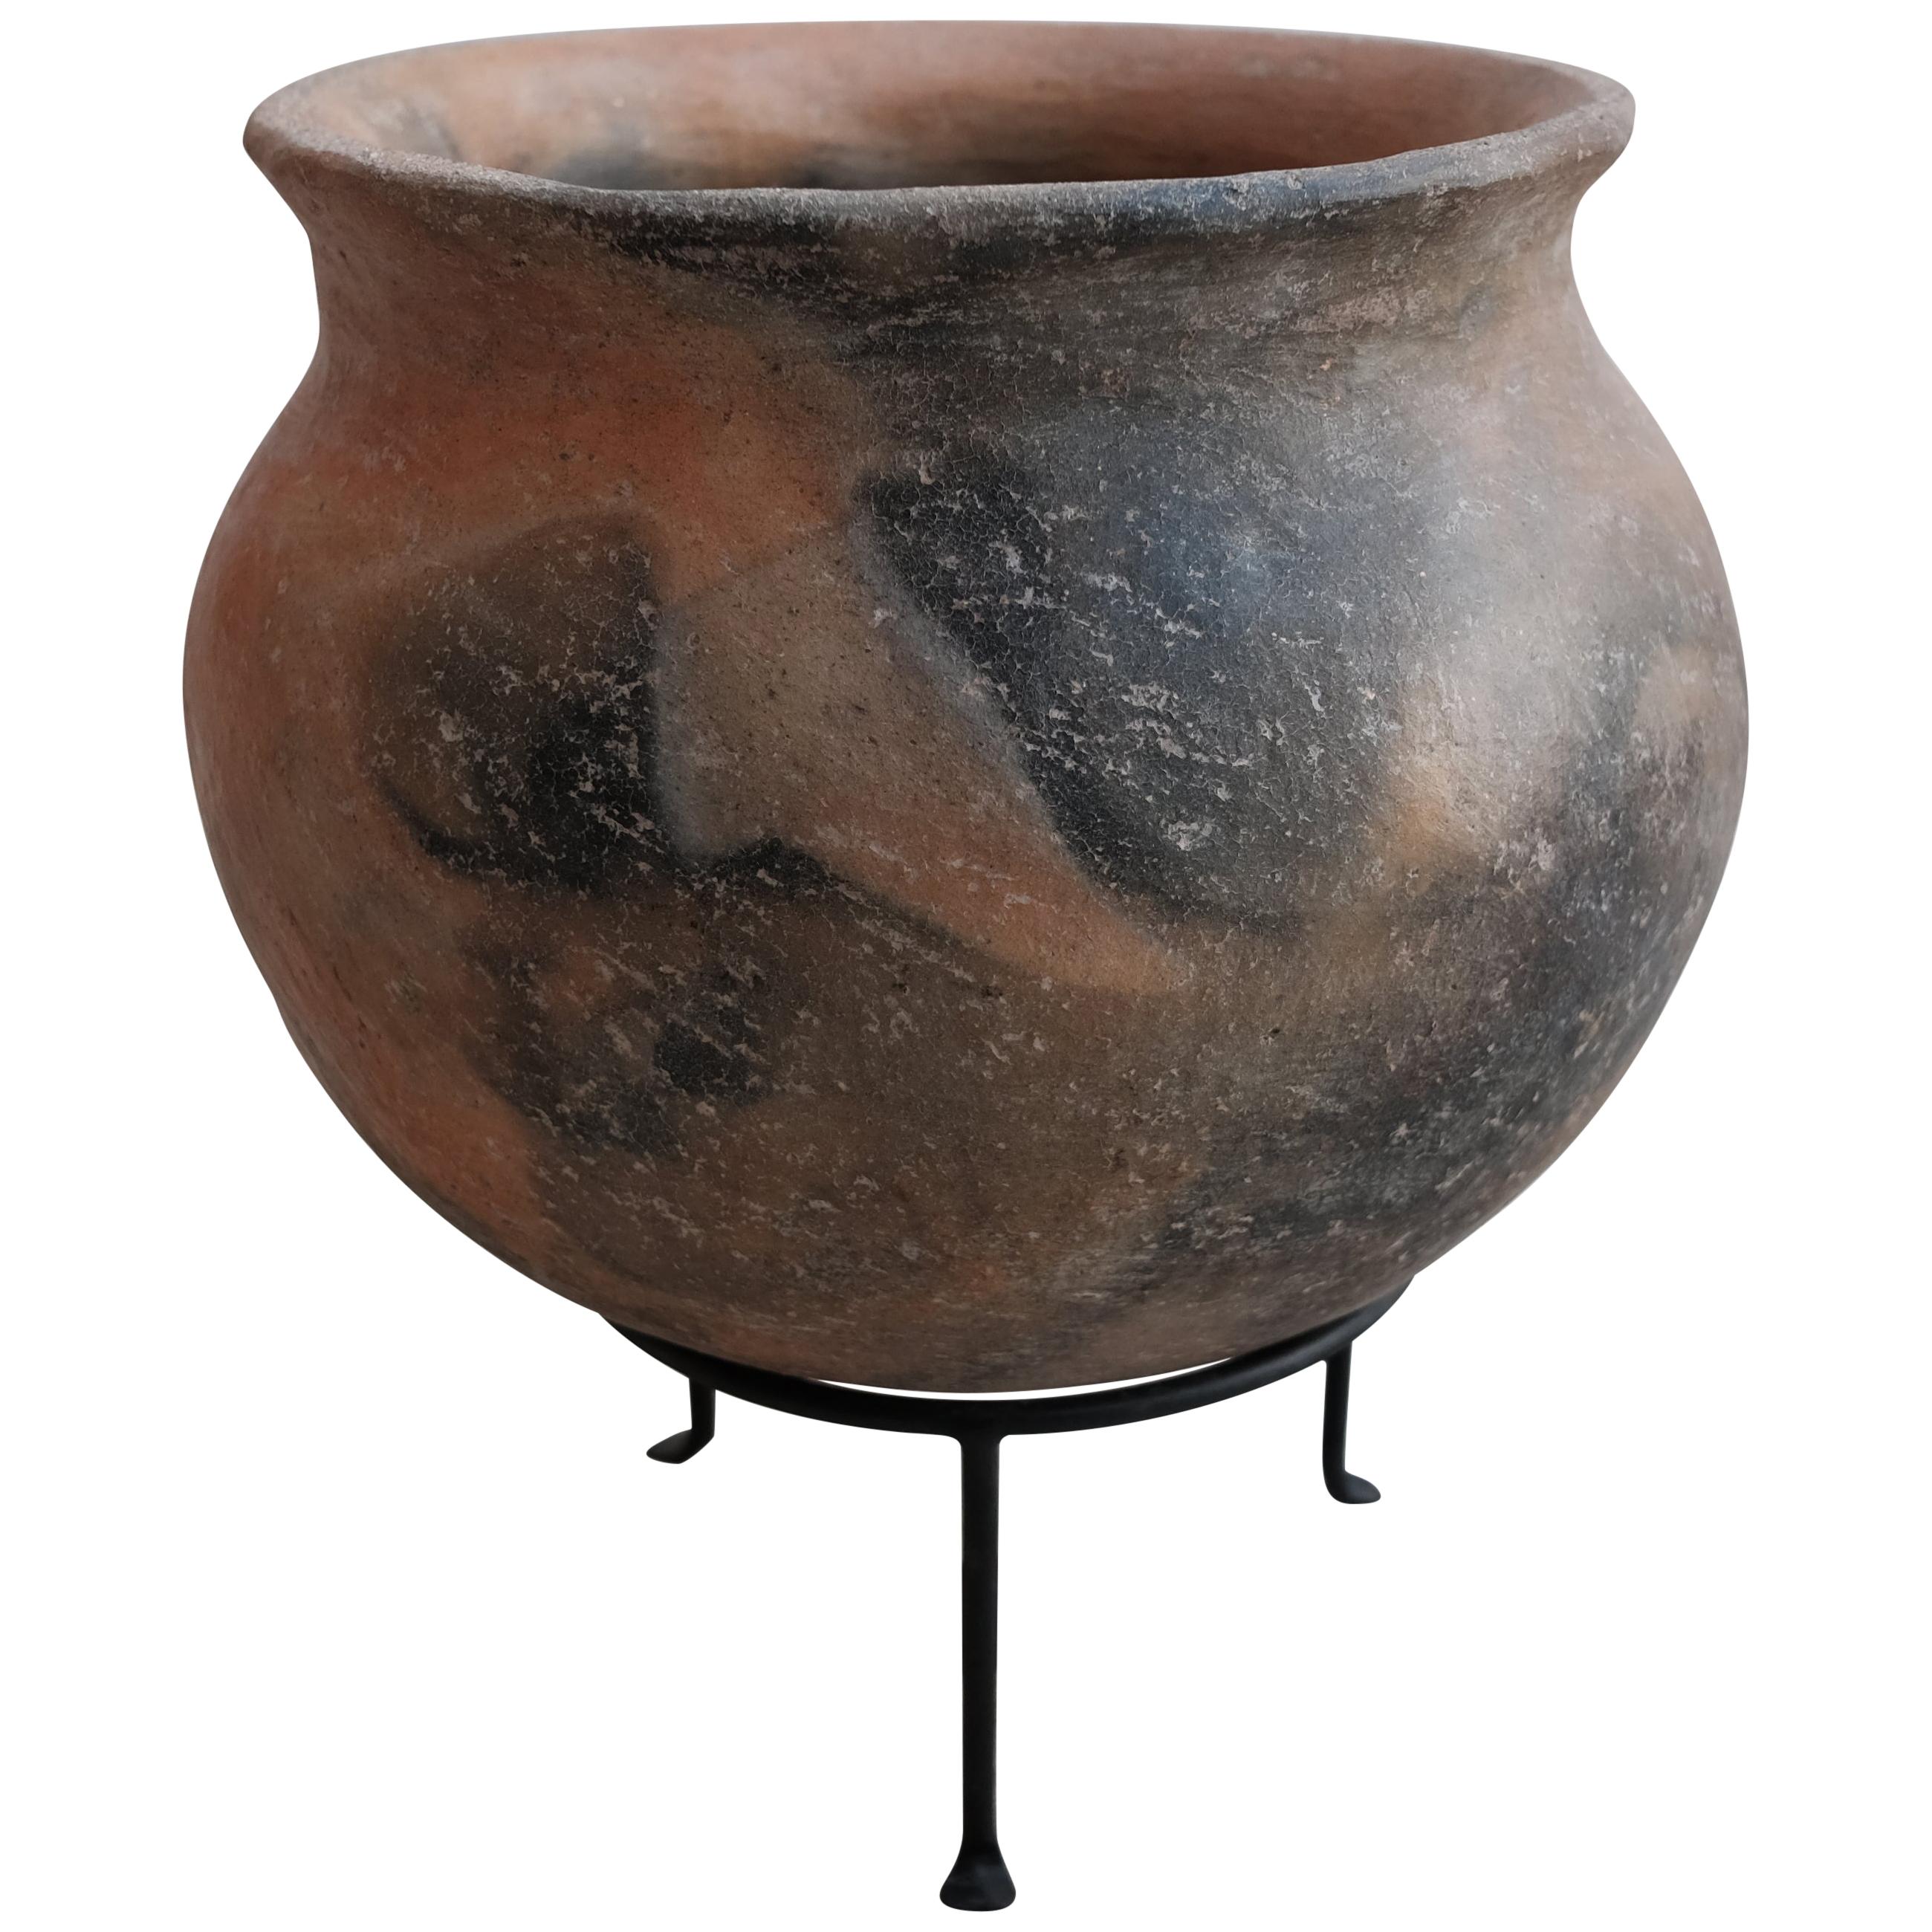 Primitive Terracotta Pot from Oaxaca, Mexico